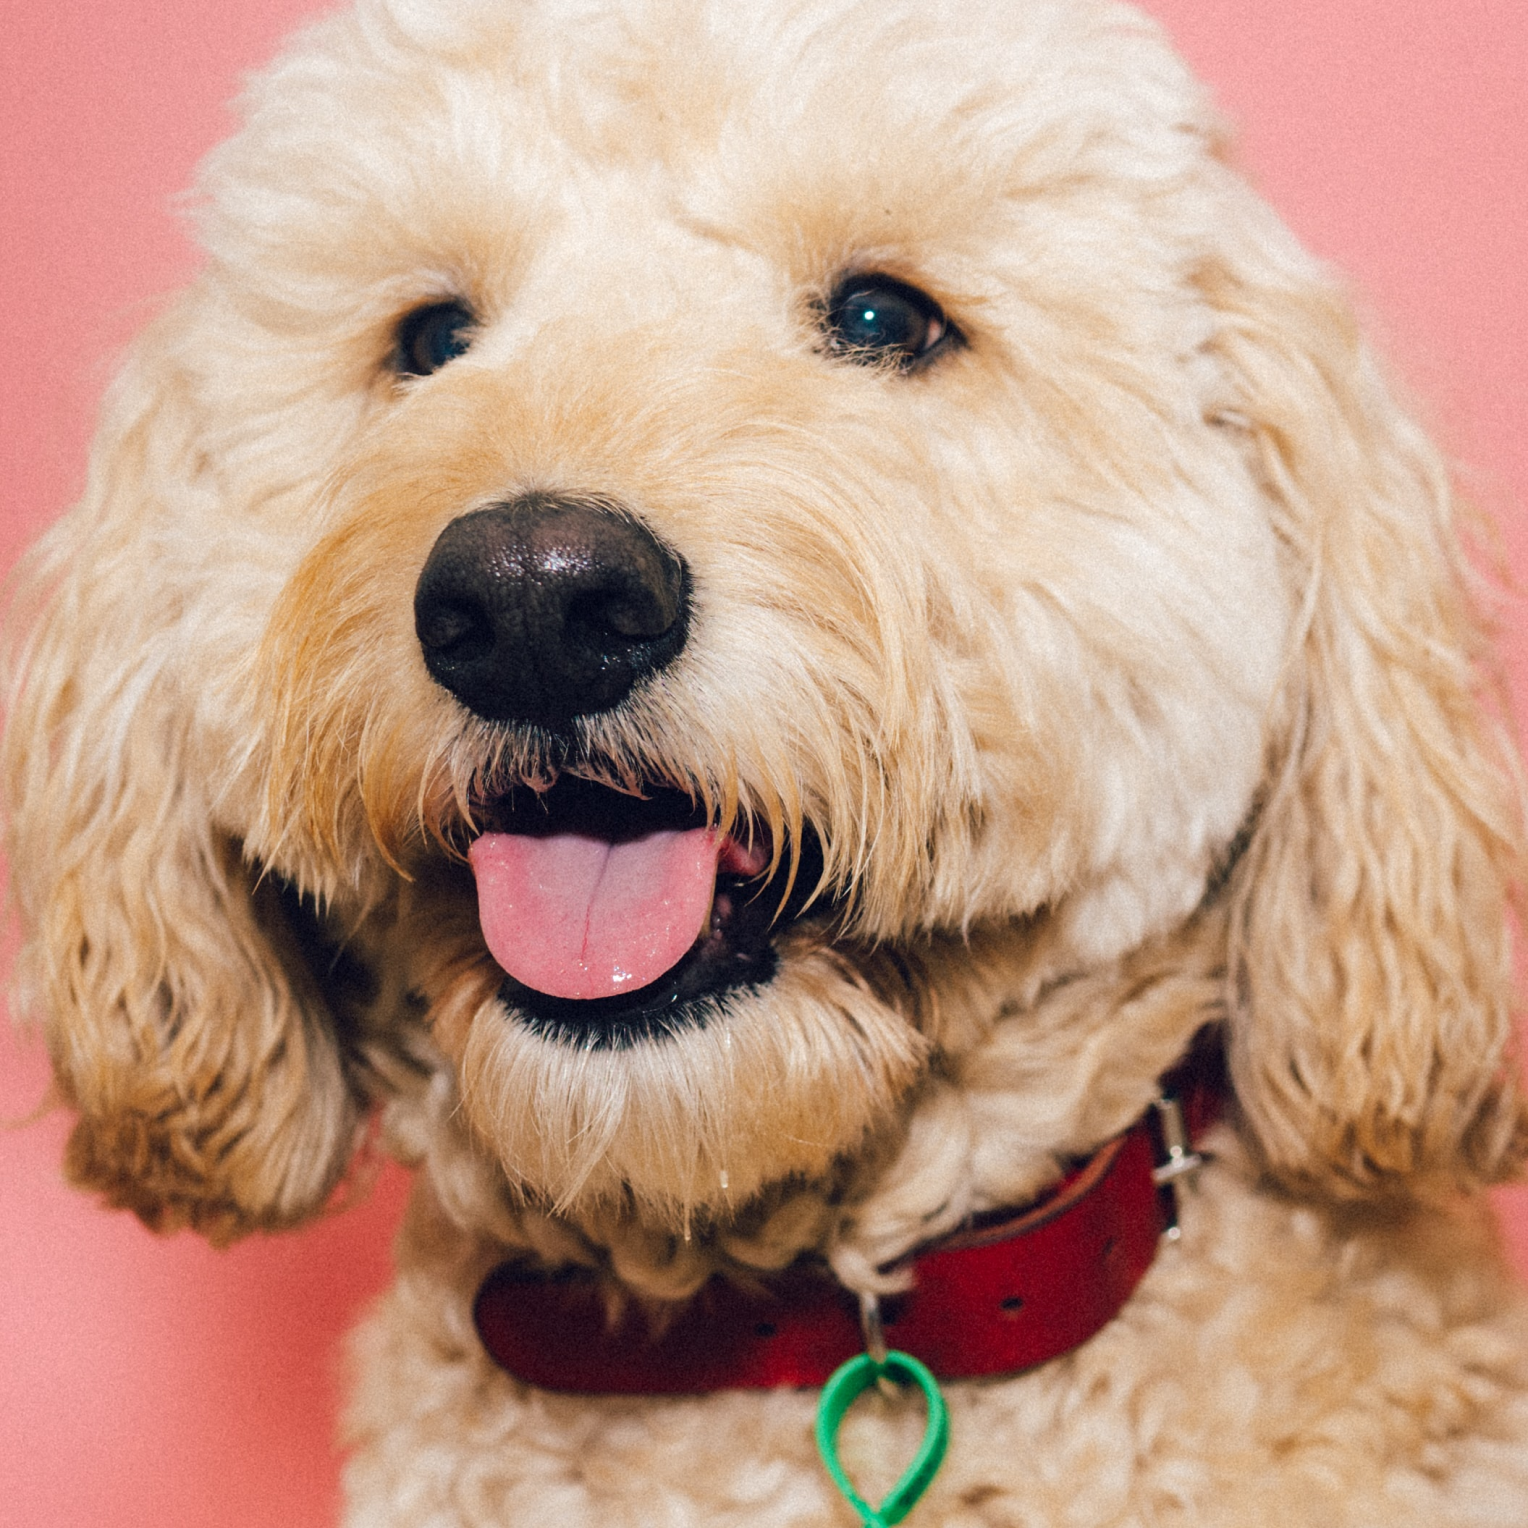 Portrait of a golden dog on pink textile.